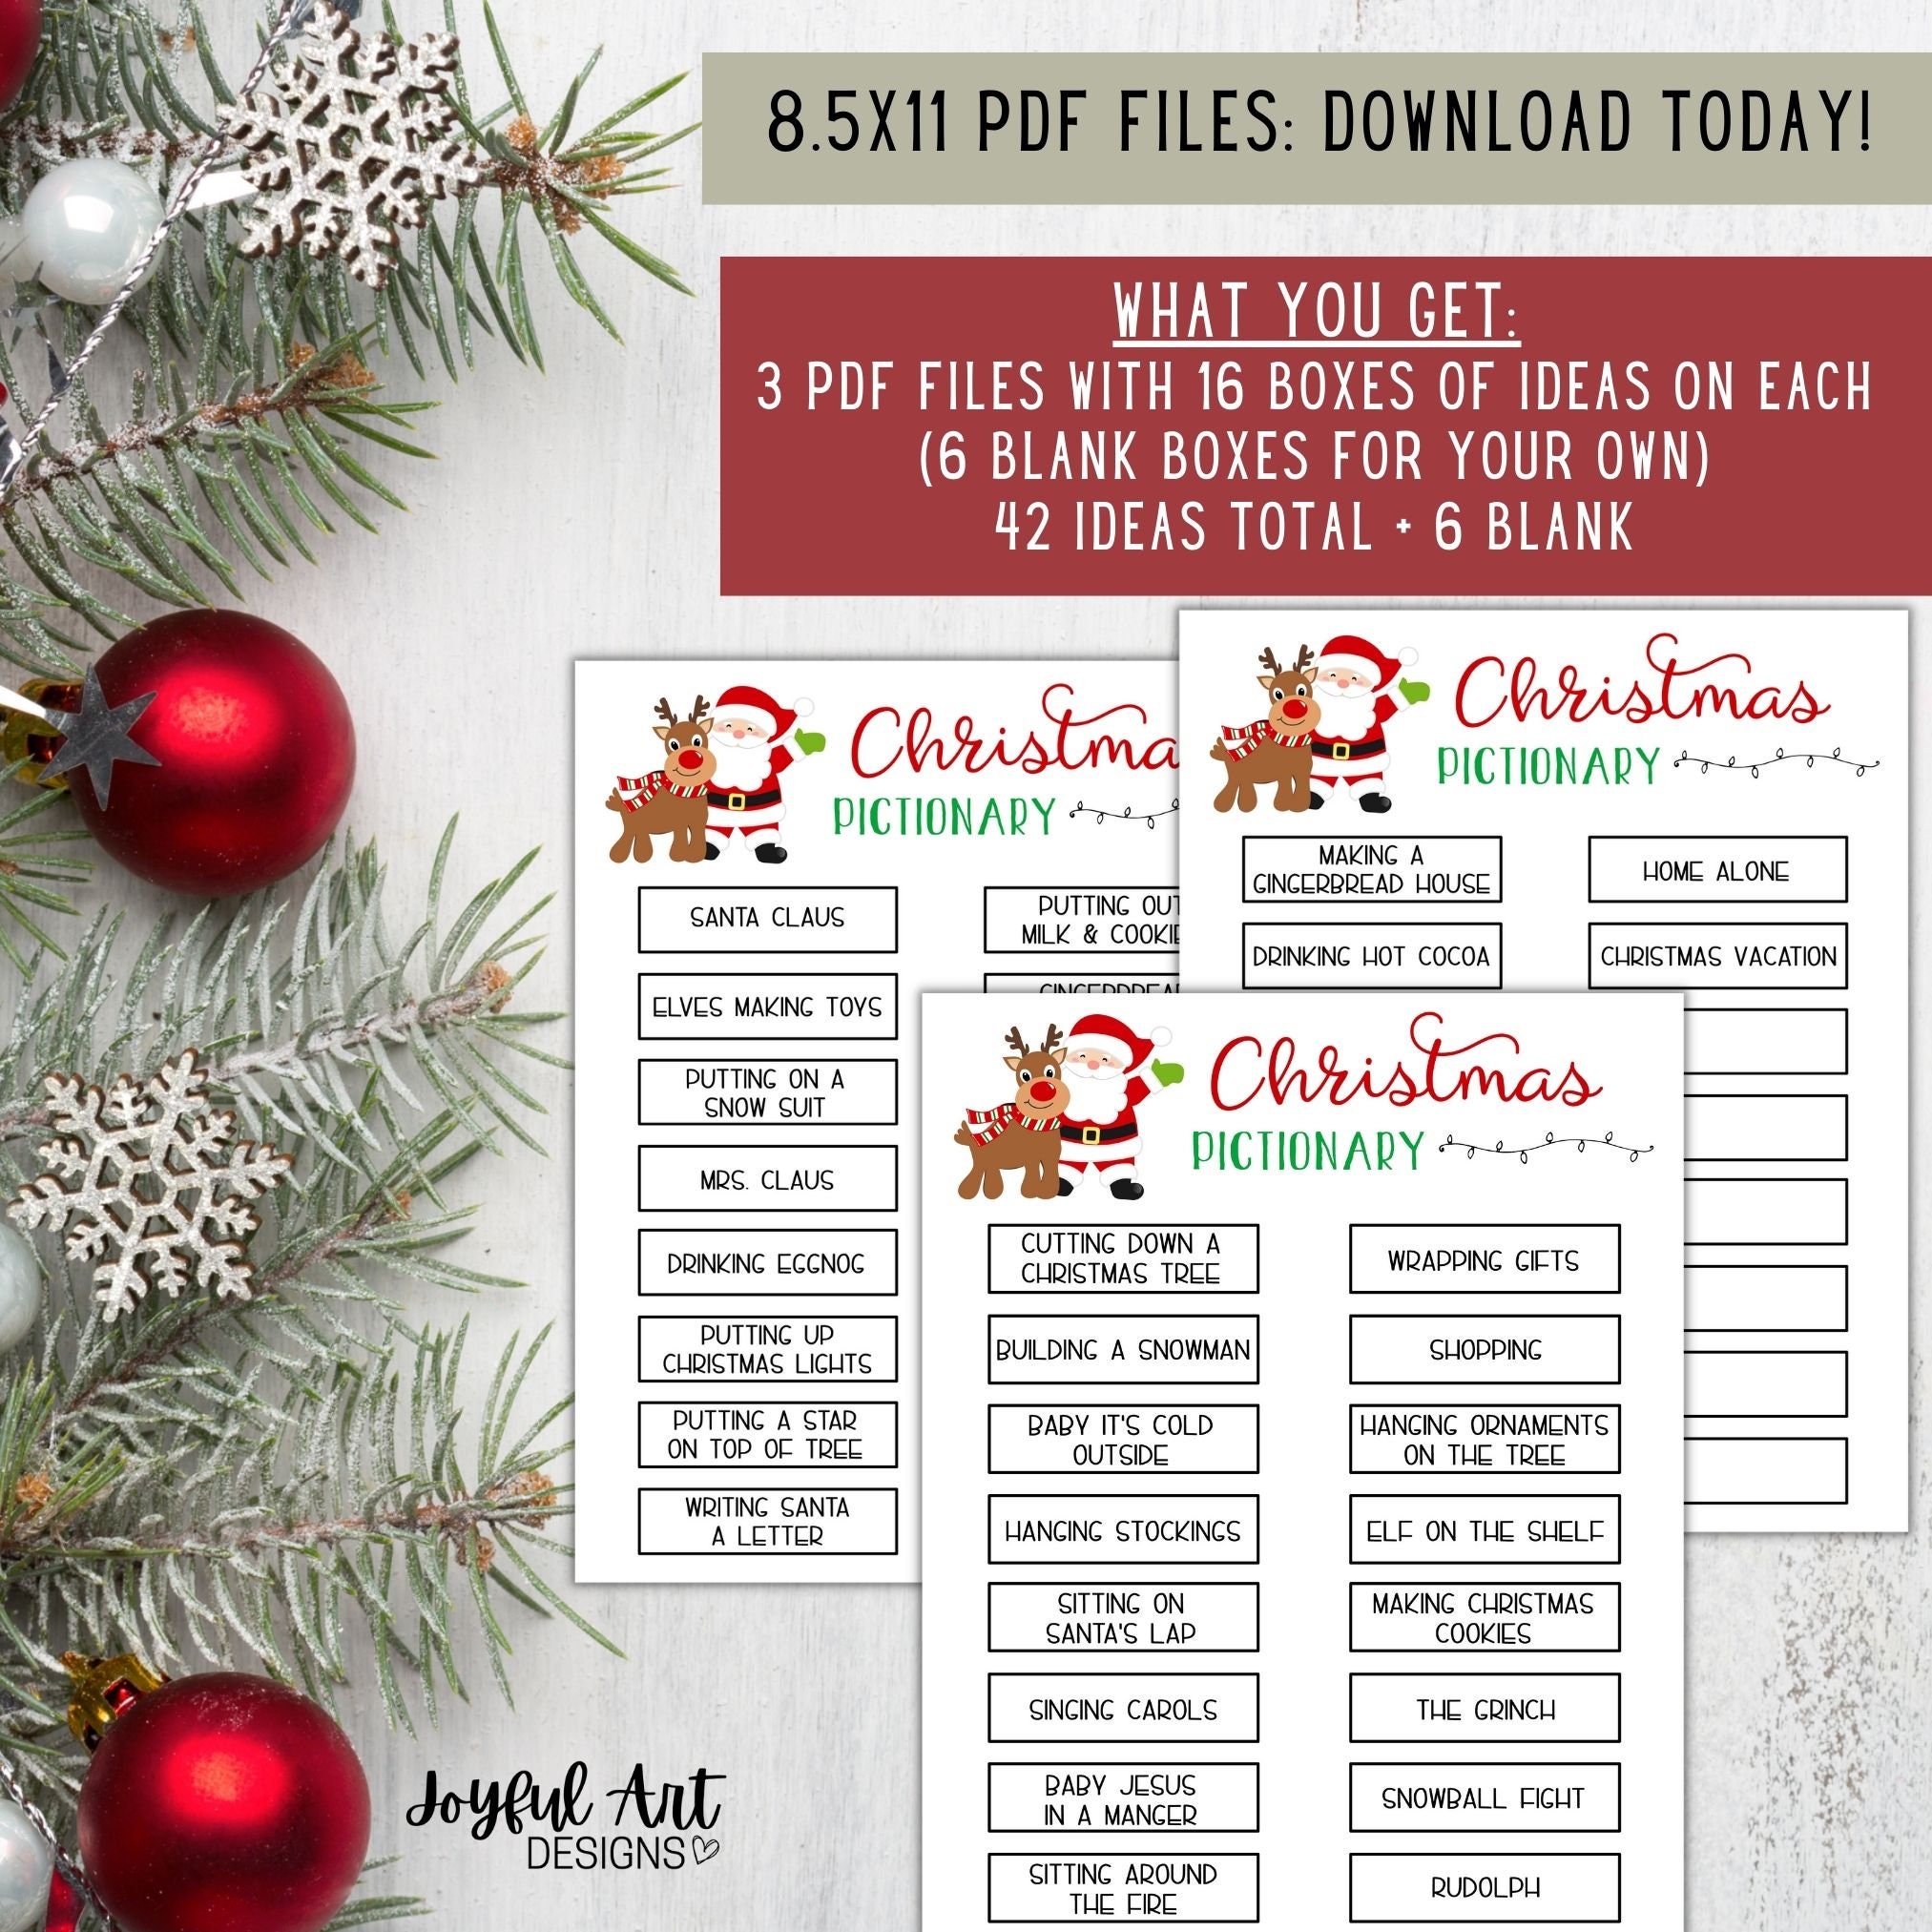 Christmas Pictionary Game For Families-Free Printable - Fox Farm Home